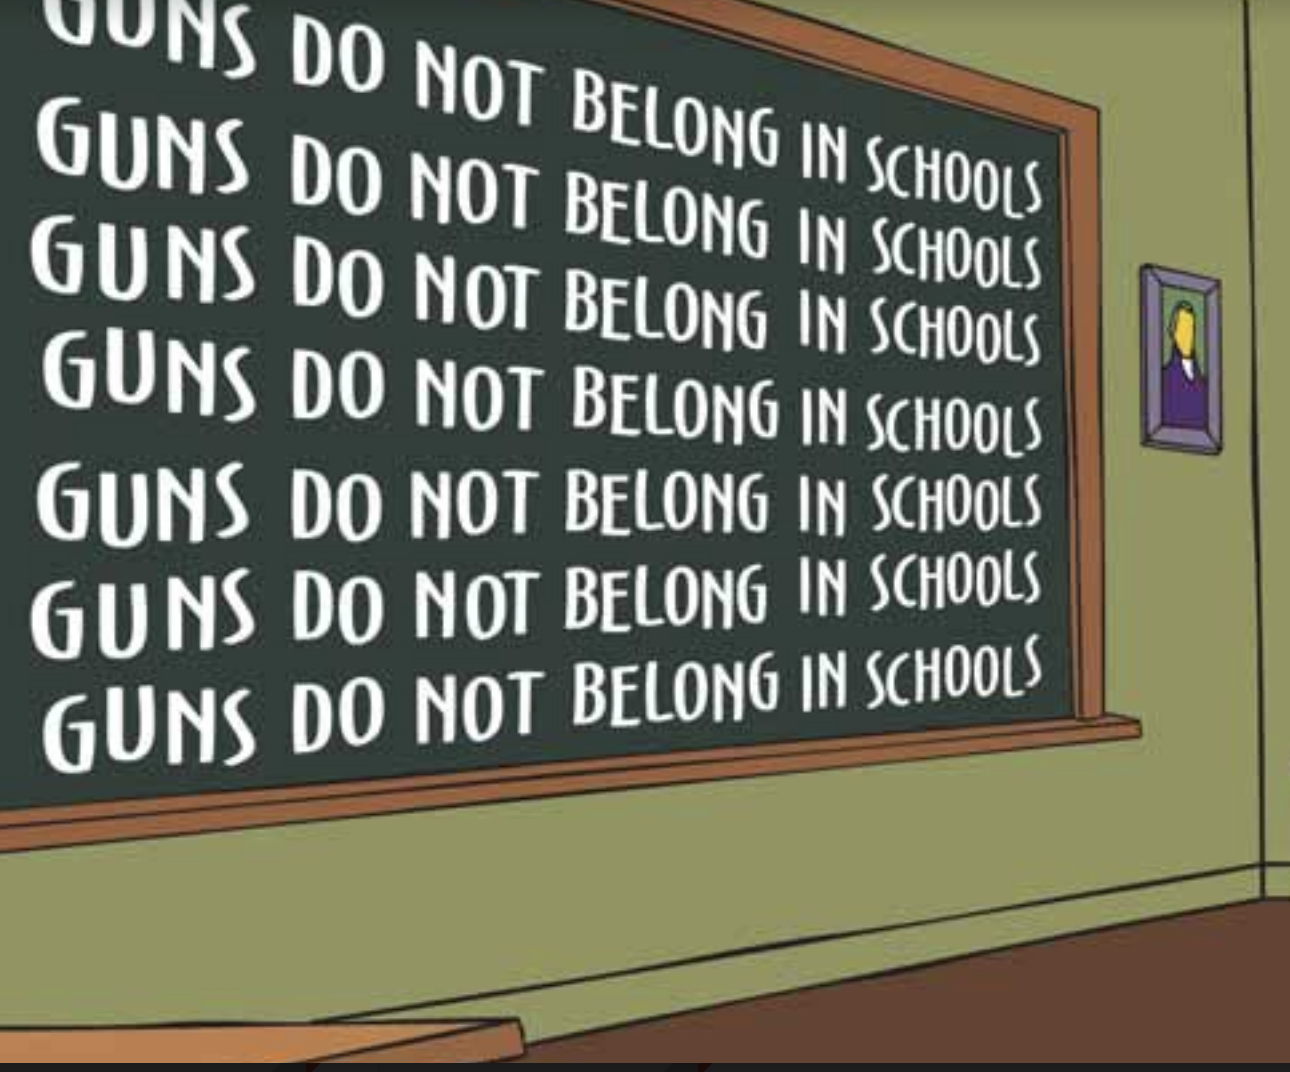 We Must Reject Guns in Schools